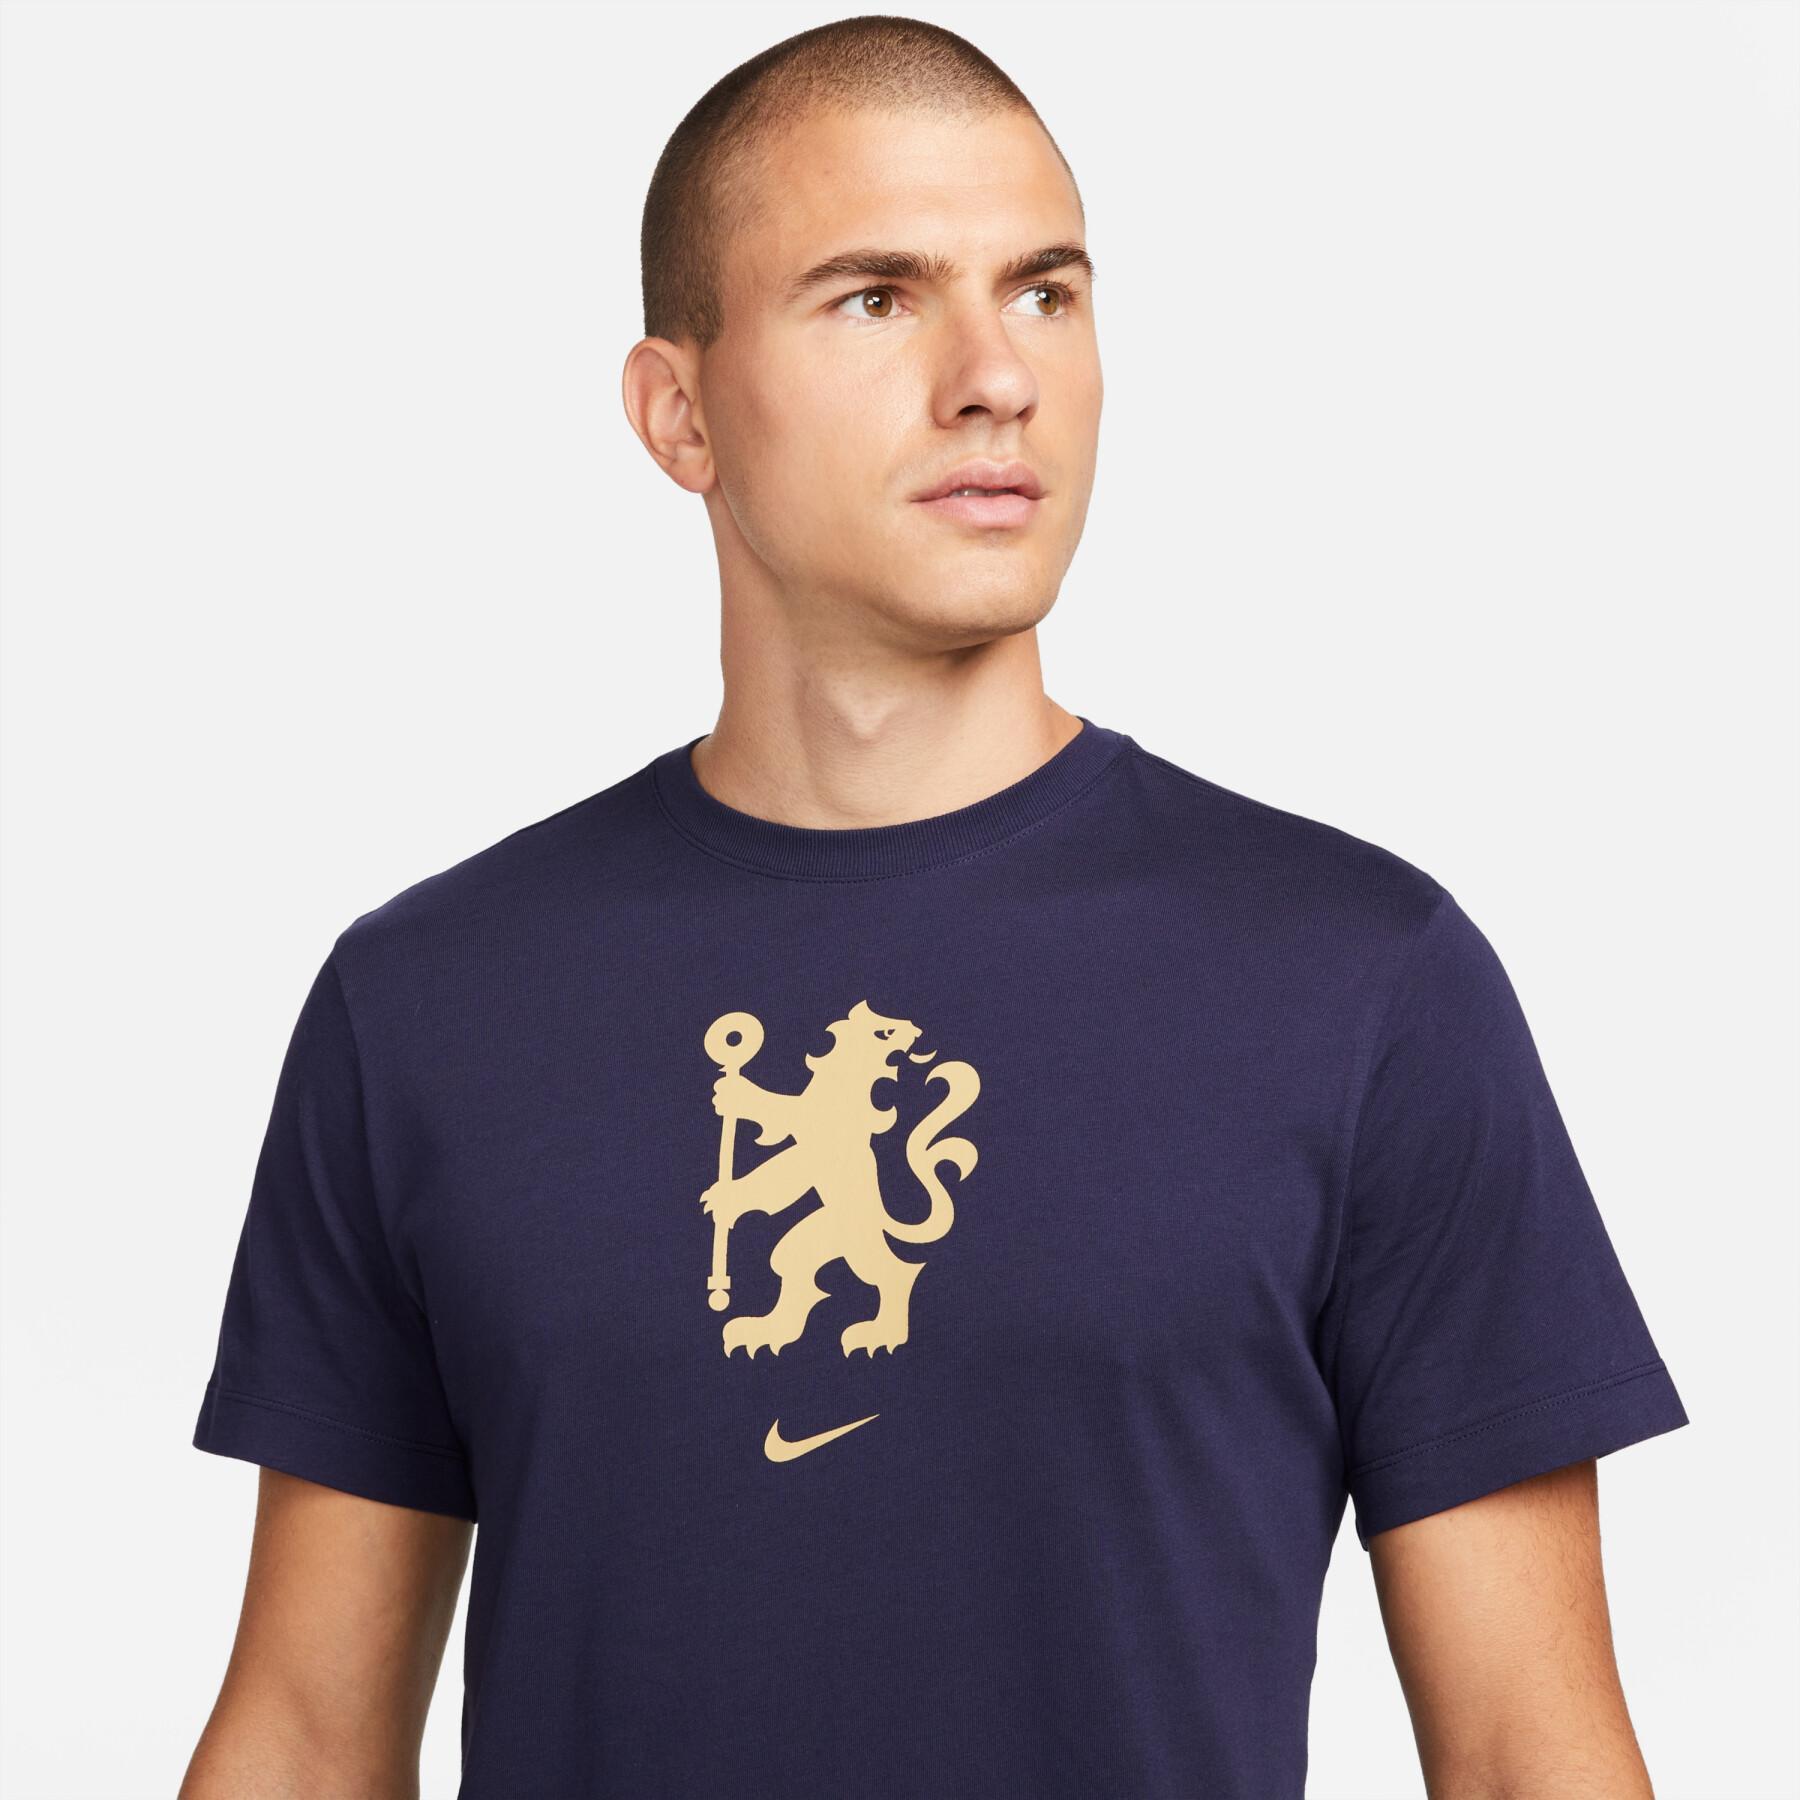 Chelsea T-shirt 2021/22